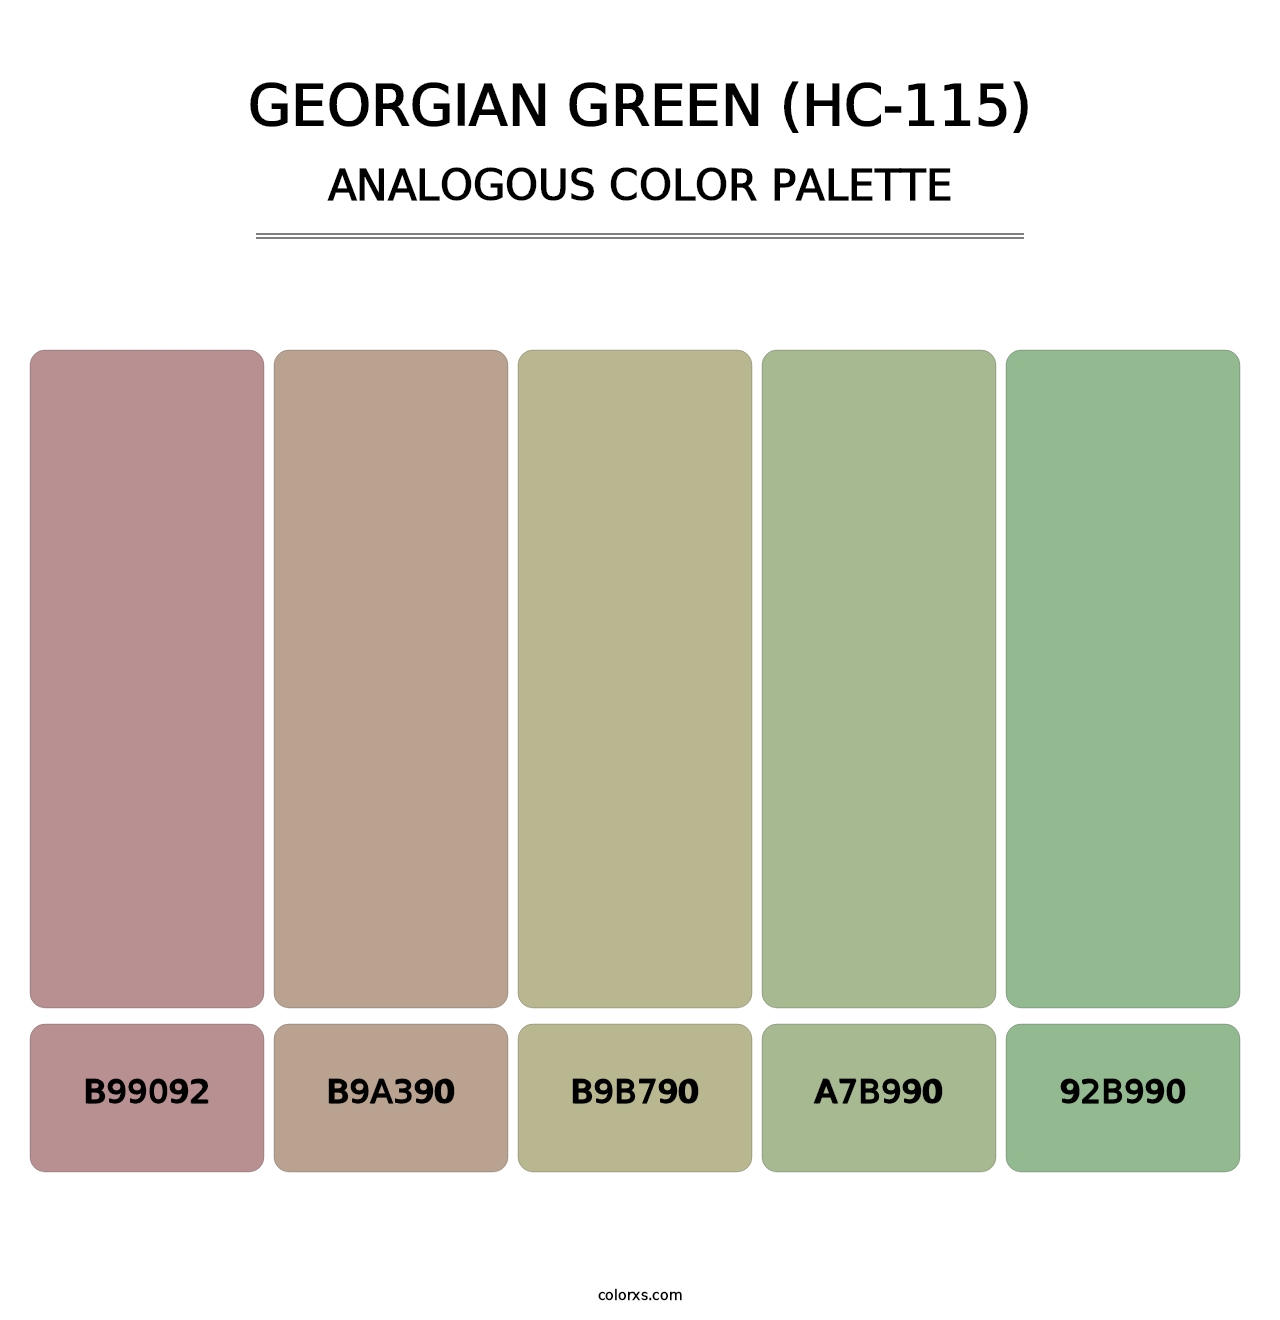 Georgian Green (HC-115) - Analogous Color Palette